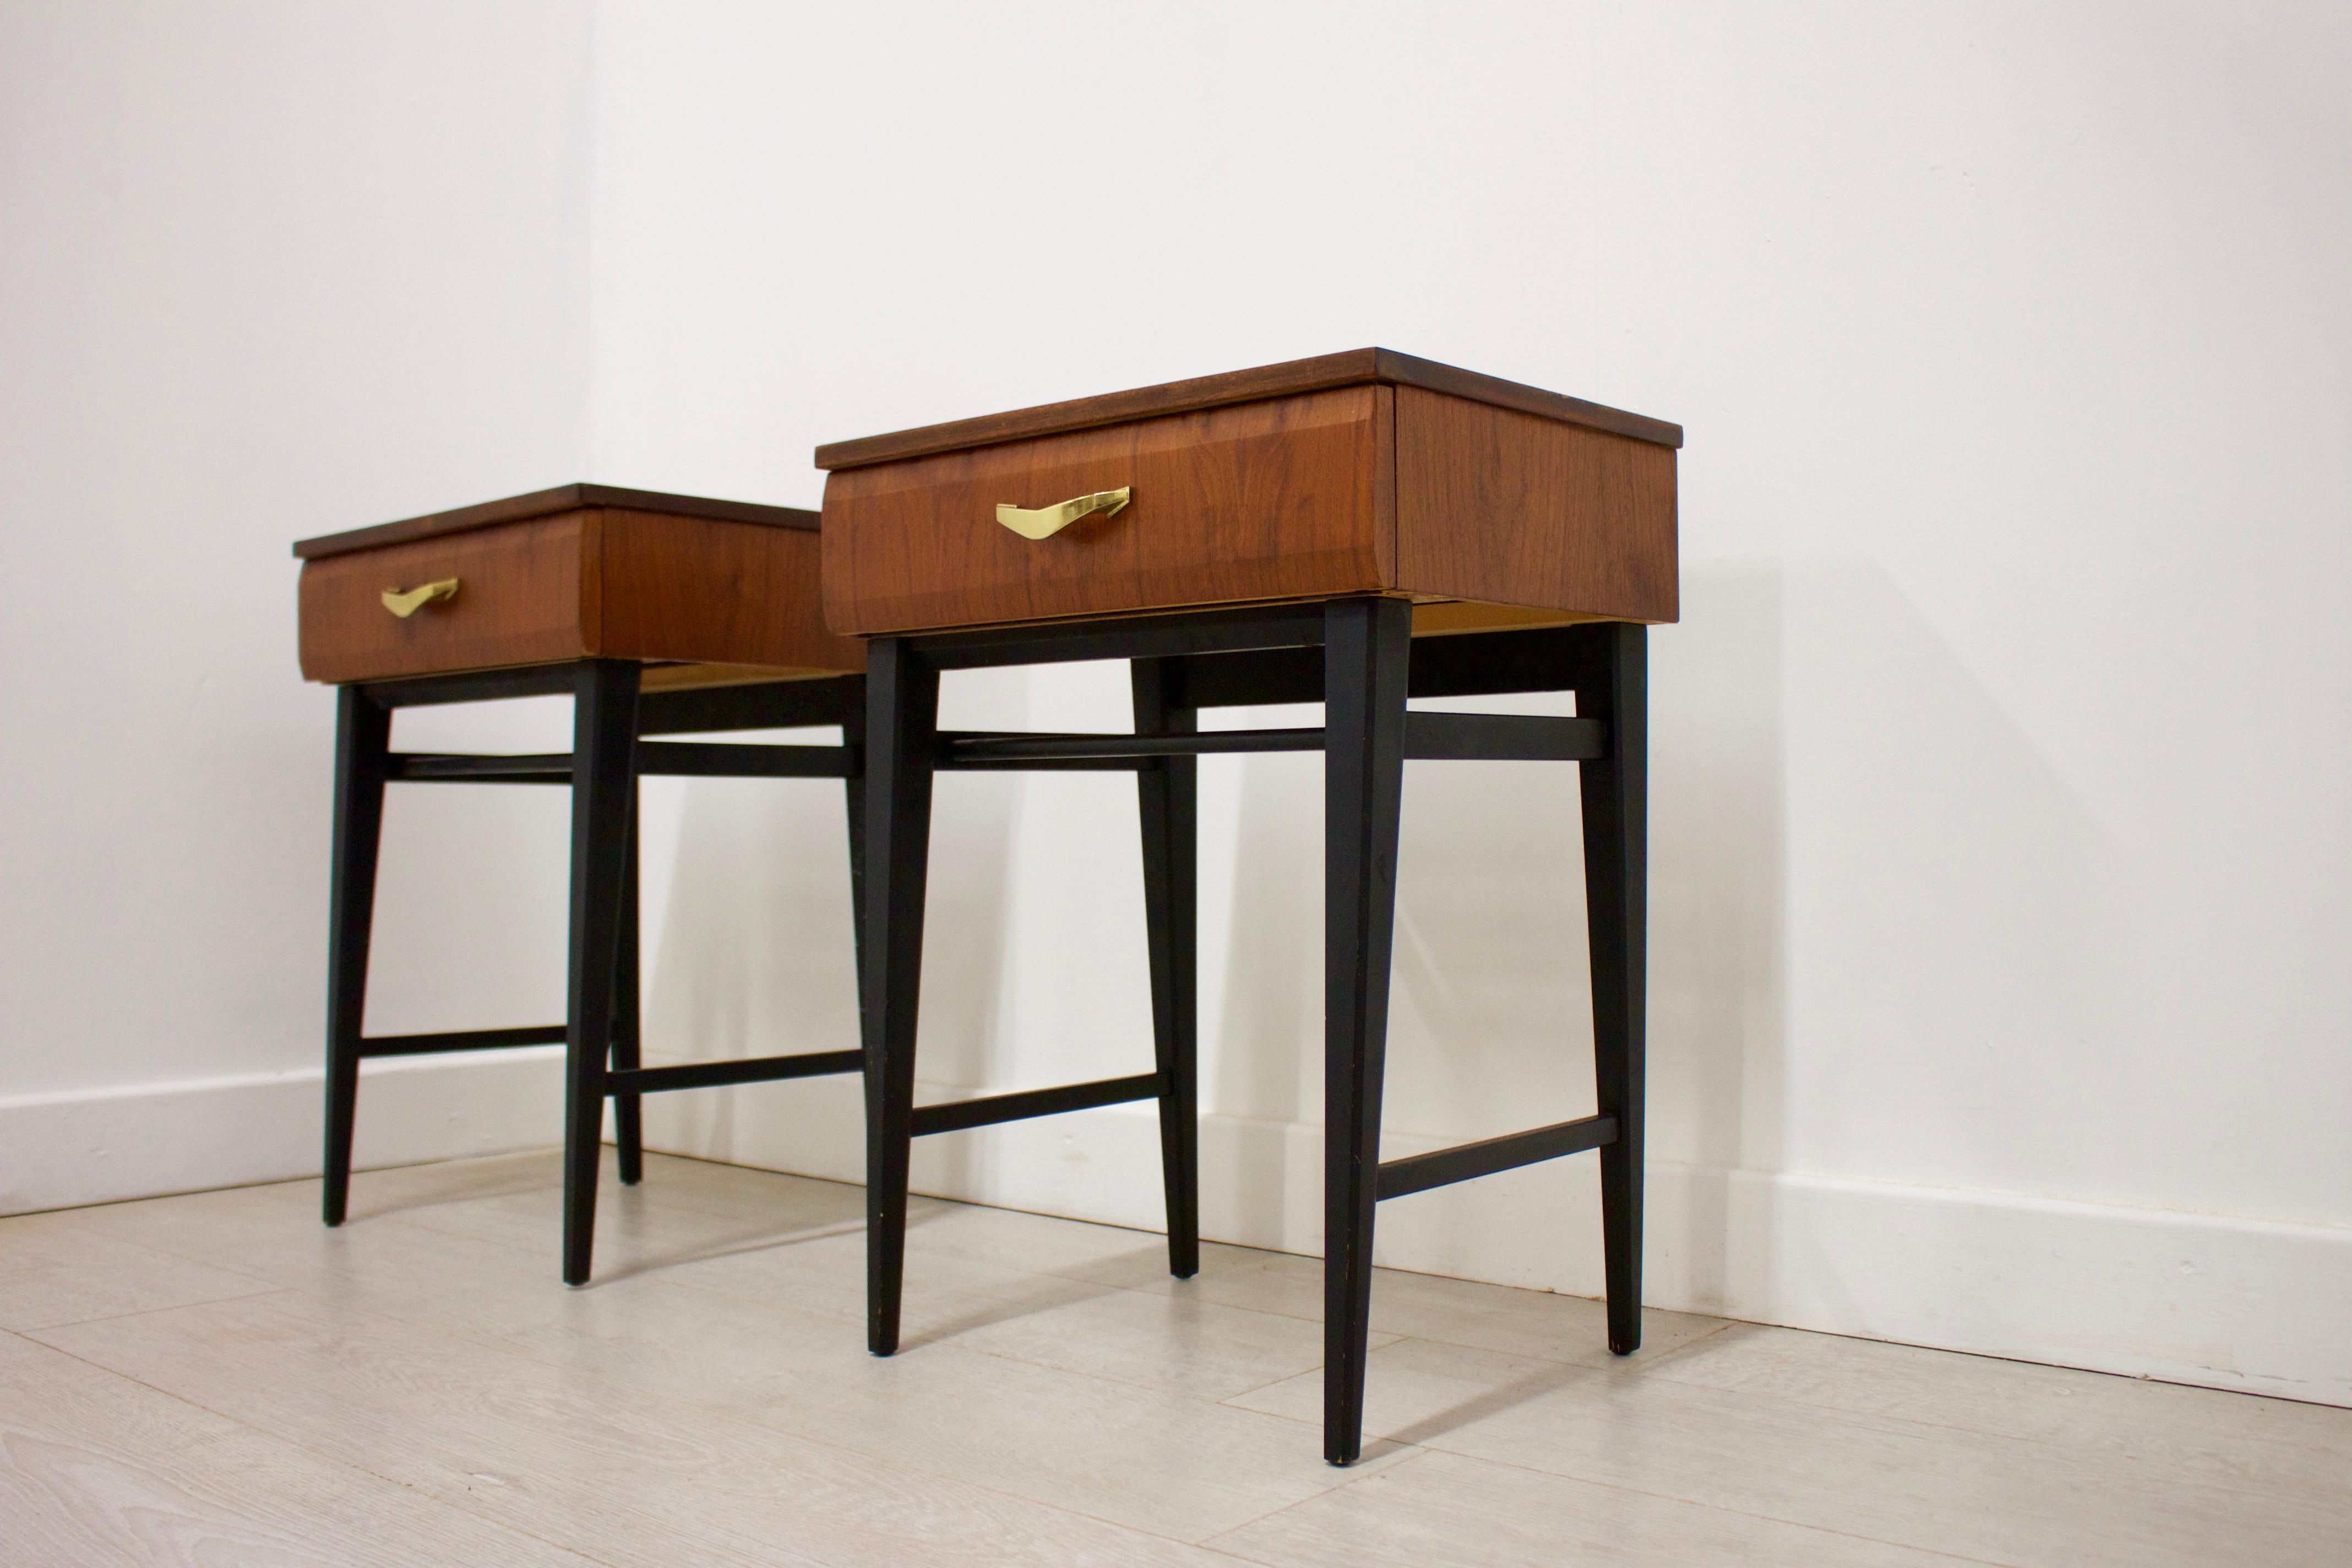 British Midcentury Walnut Meredew Italian Influenced Bedside Cabinet Tables, Set of 2